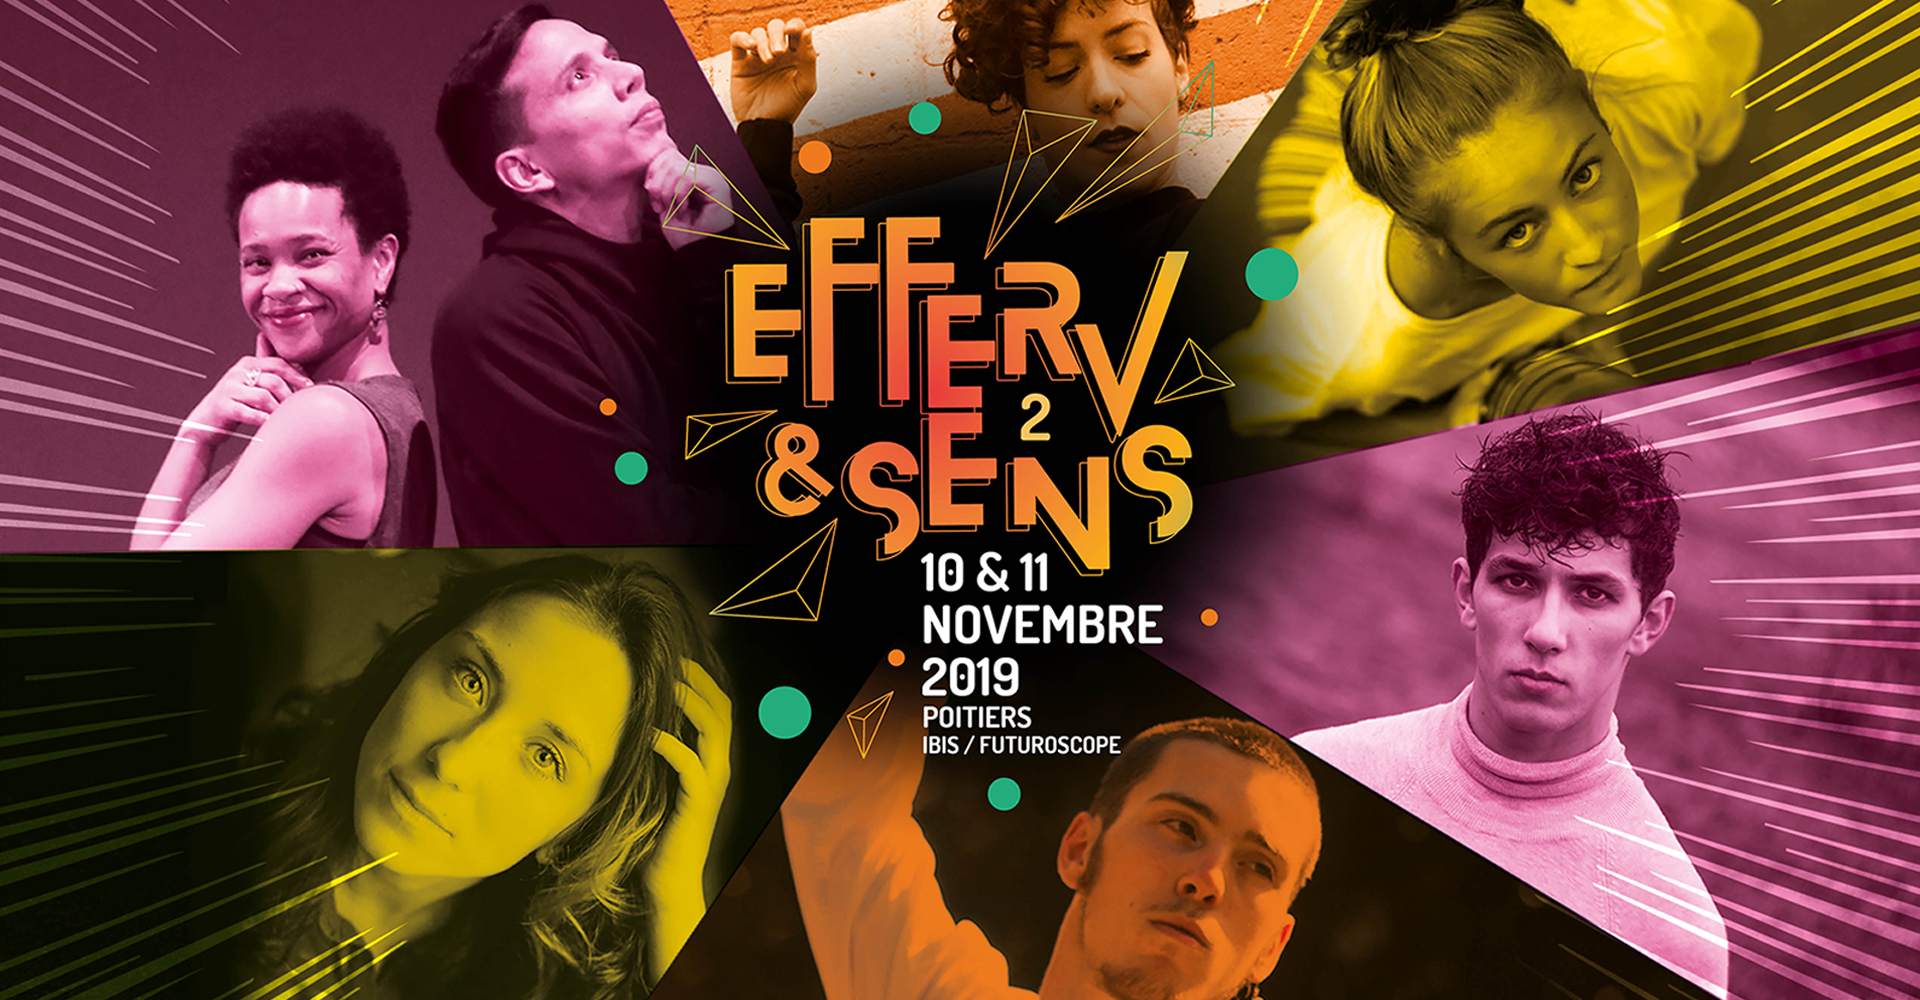 Efferv&Sens 2 de novembre 2019 à l'hôtel Ibis Site du Futuroscope